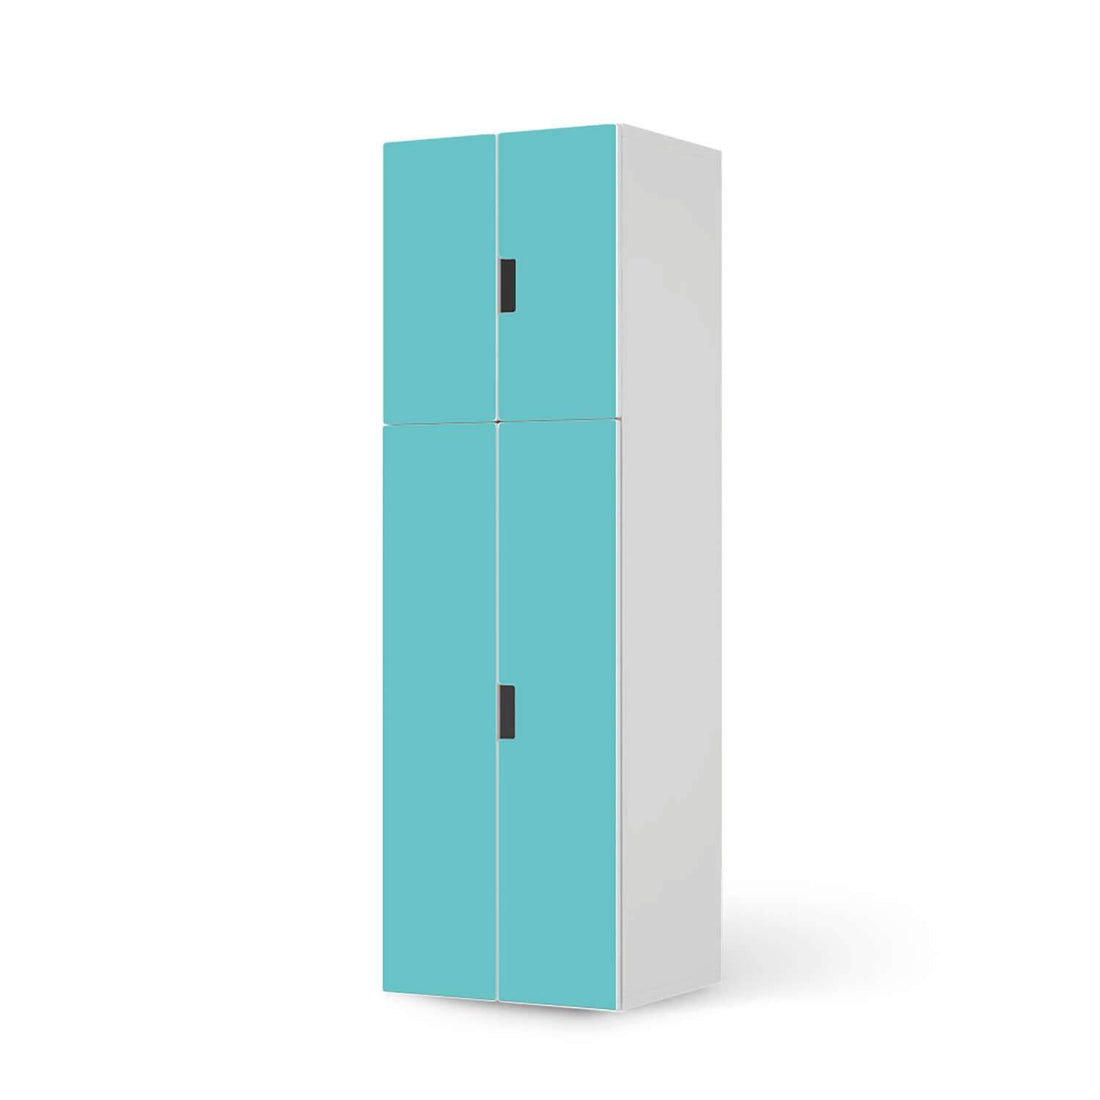 Selbstklebende Folie Türkisgrün Light - IKEA Stuva kombiniert - 2 große Türen und 2 kleine Türen (Kombination 2)  - weiss